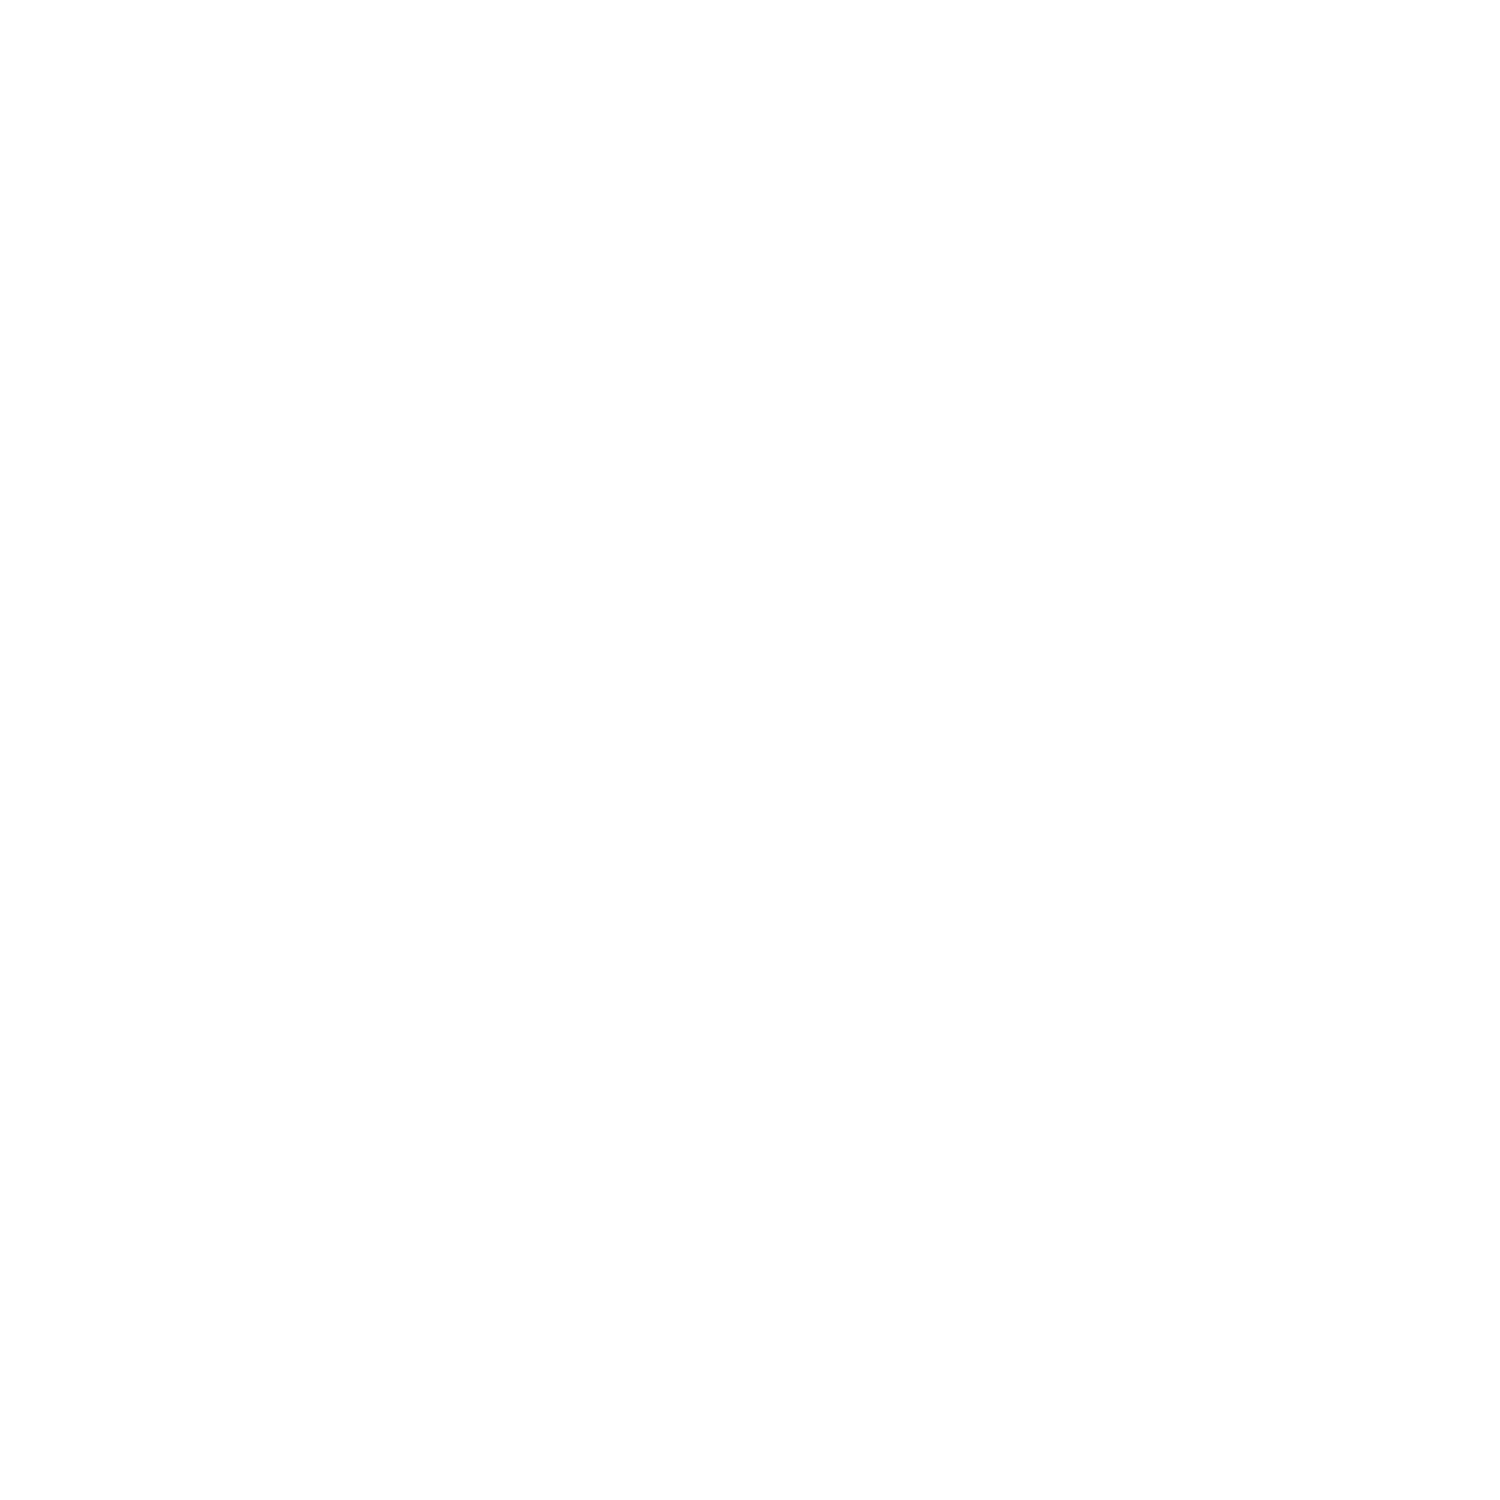 More information about Kulturresan i Dalarna.